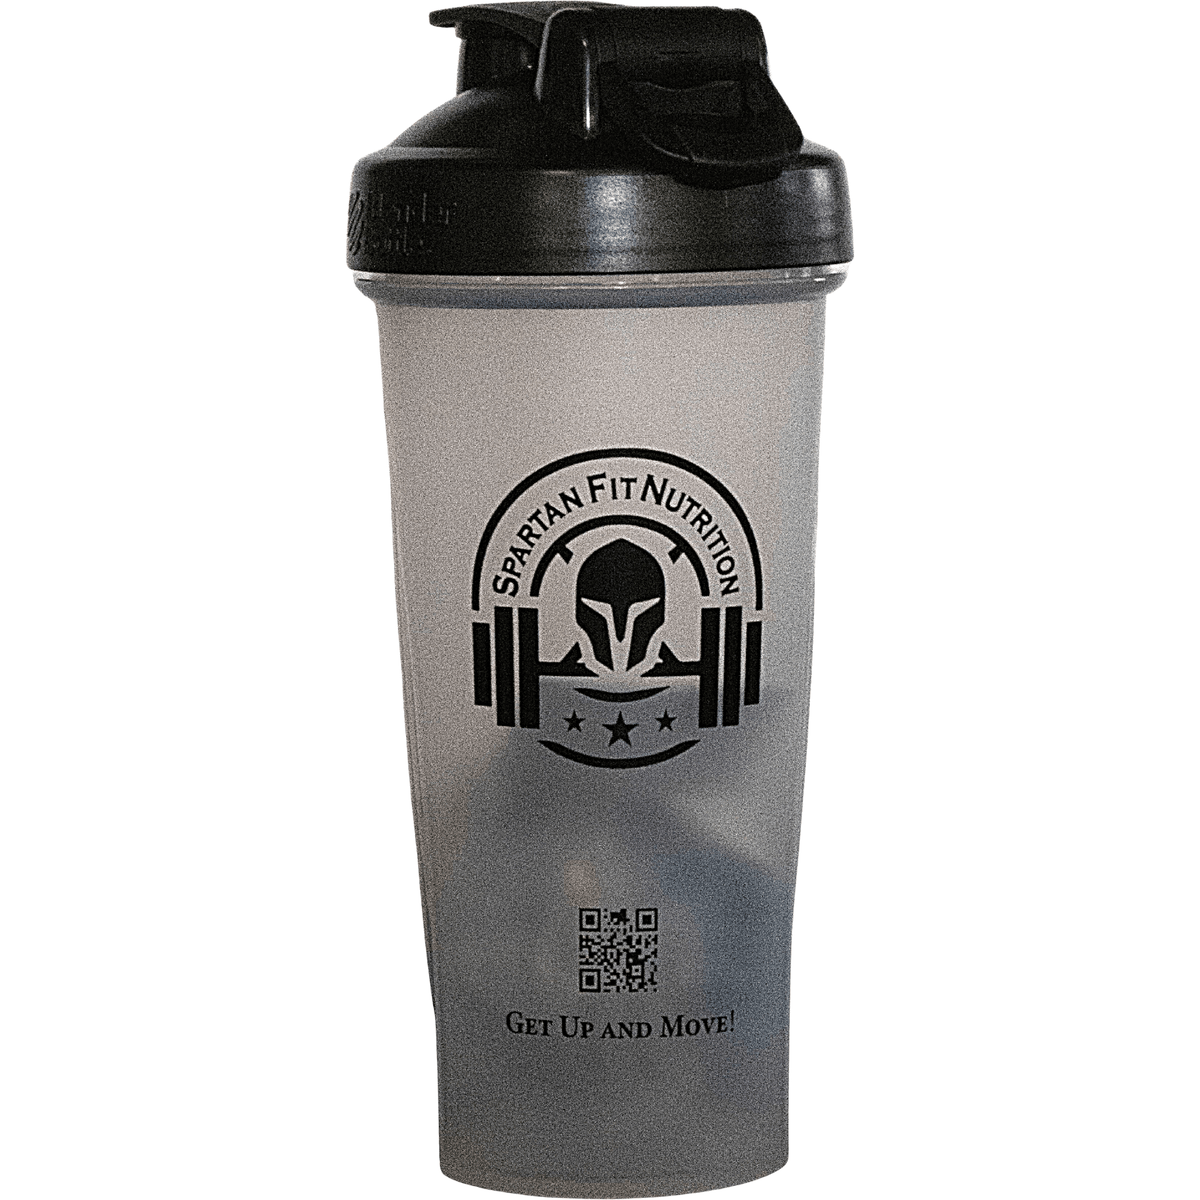 The Spartan Race Kit | Leonidas Blend Pre-Workout Drink + SPARTAN HYDRATION TABLETS - 90-SERVING POUCH + SPARTAN IMMUNE CAPSULES - 30-SERVING POUCH + Blender Bottle | Spartan Fit Nutrition | High Quality Shaker Bottle + Spartan Race Entry